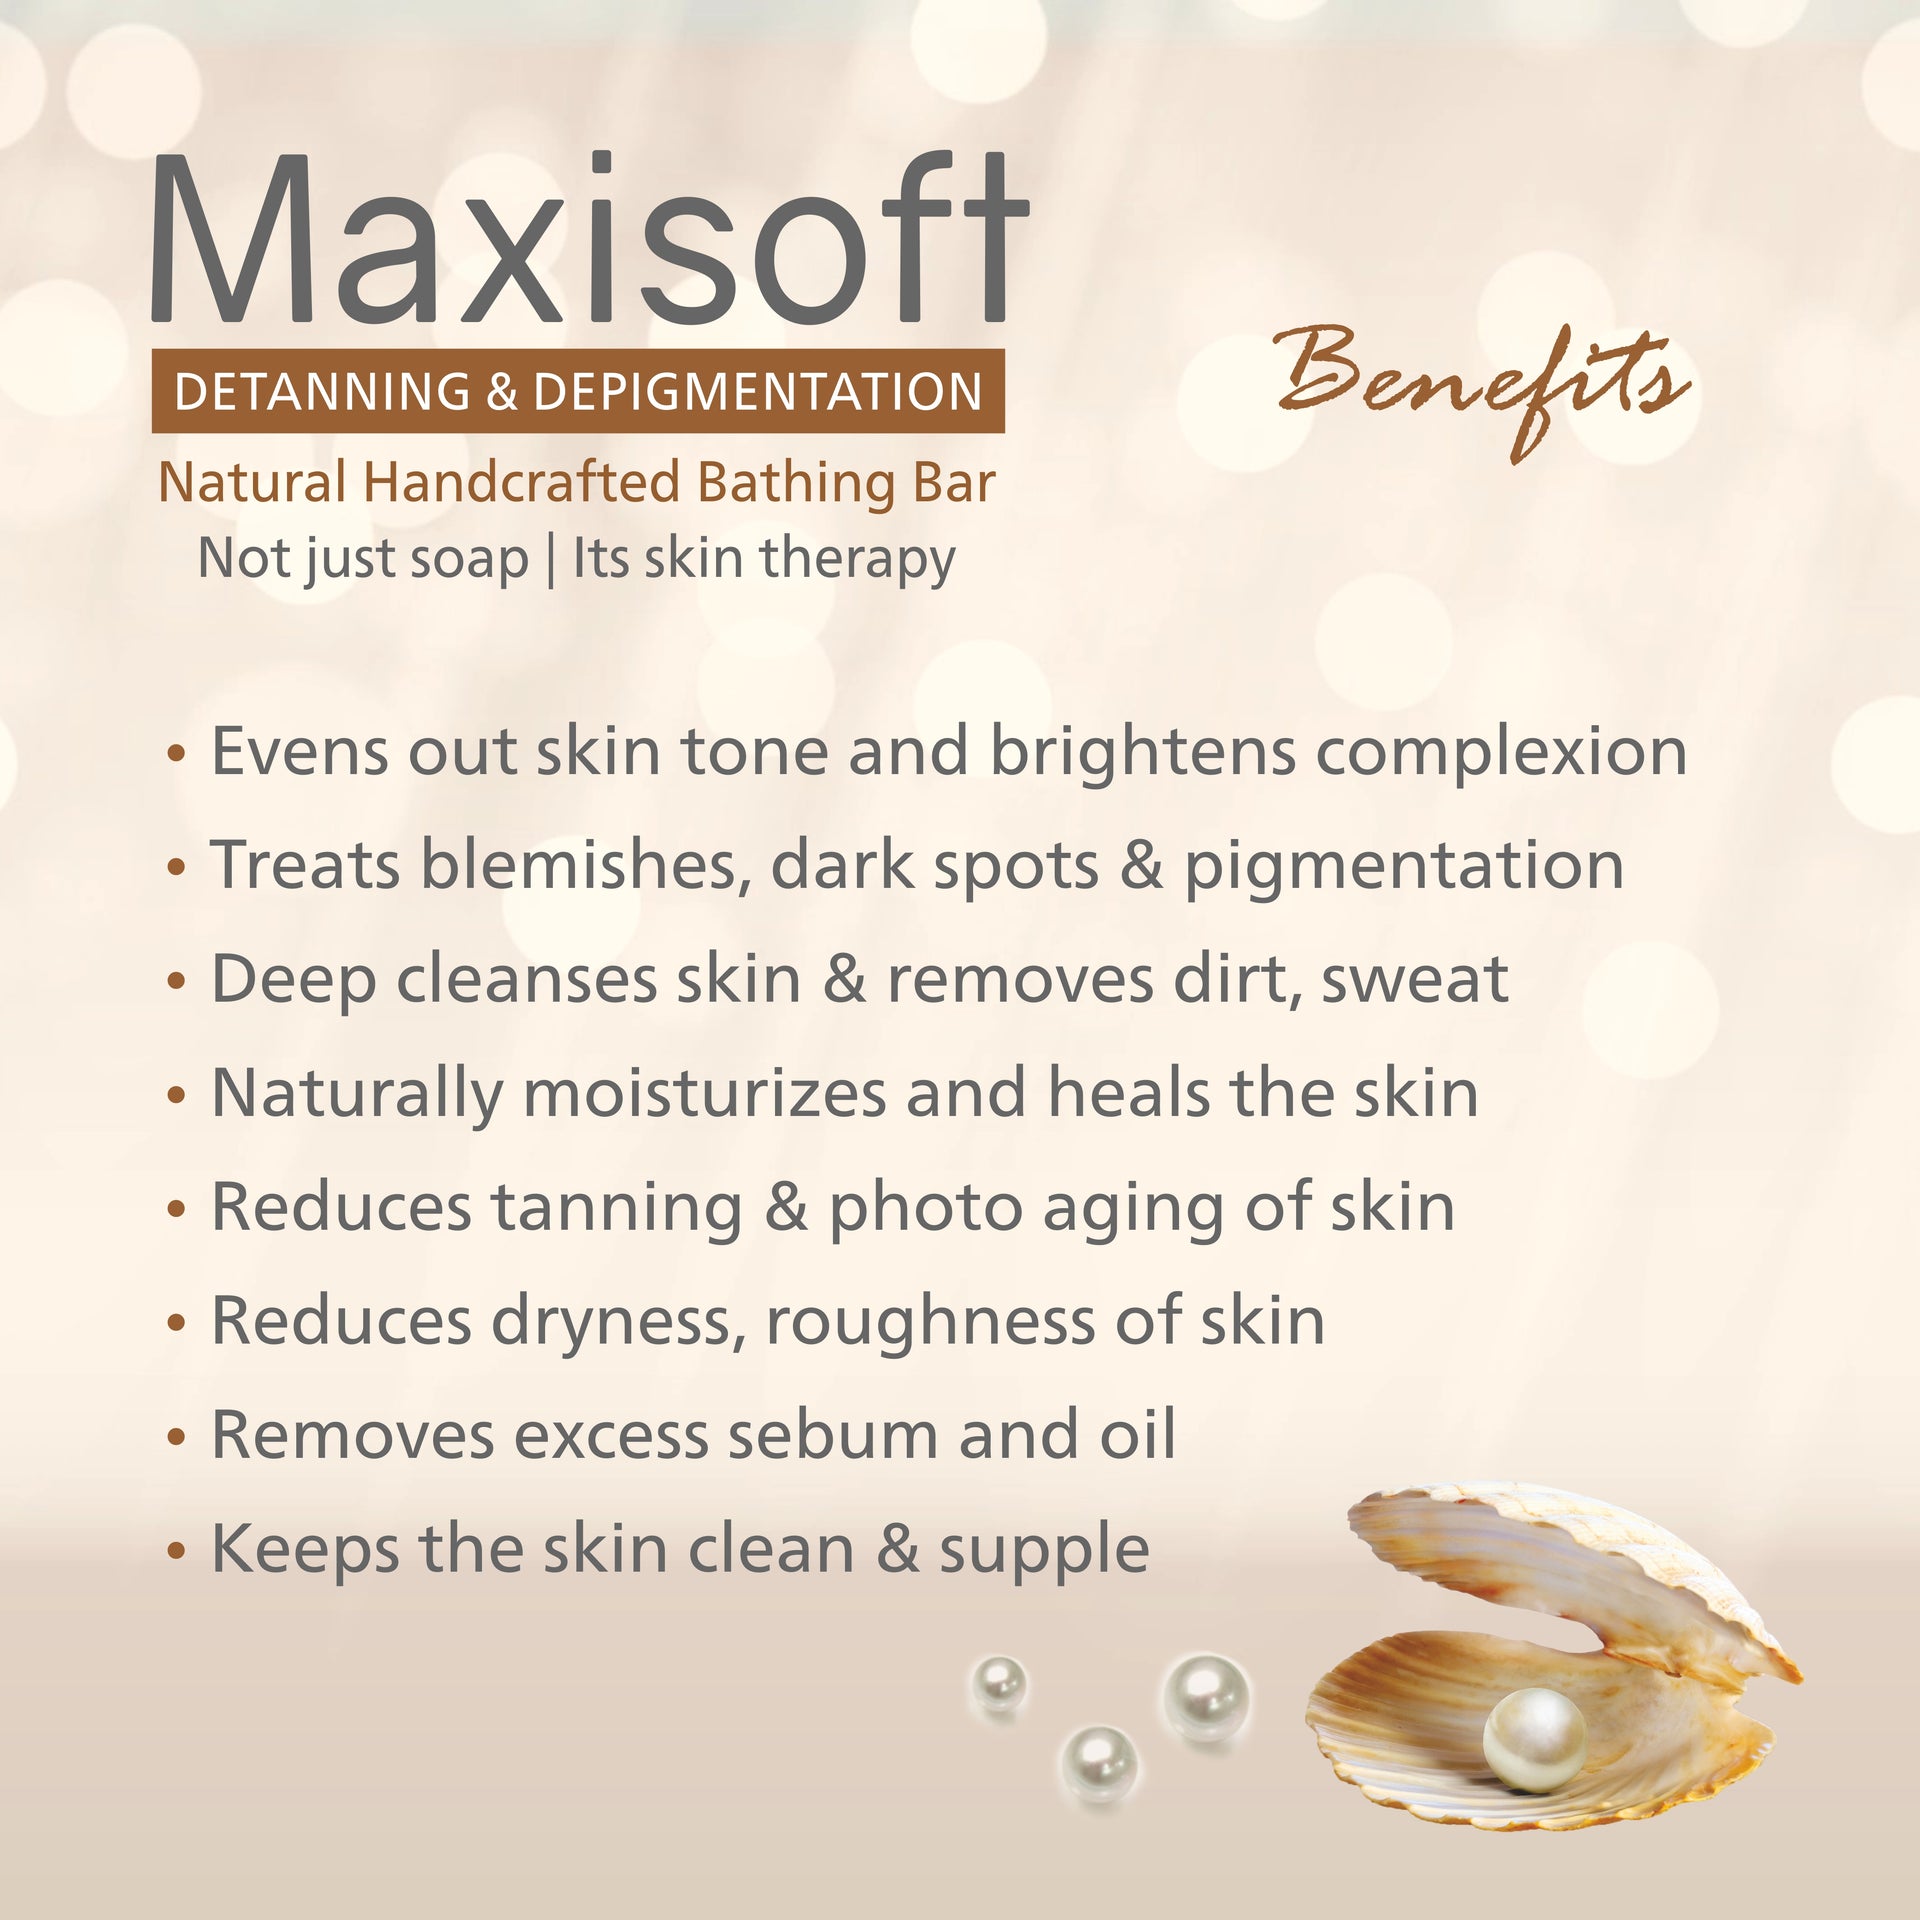 Maxisoft Detanning & Depigmentation Natural Handcrafted Bathing Bar (75 gm)